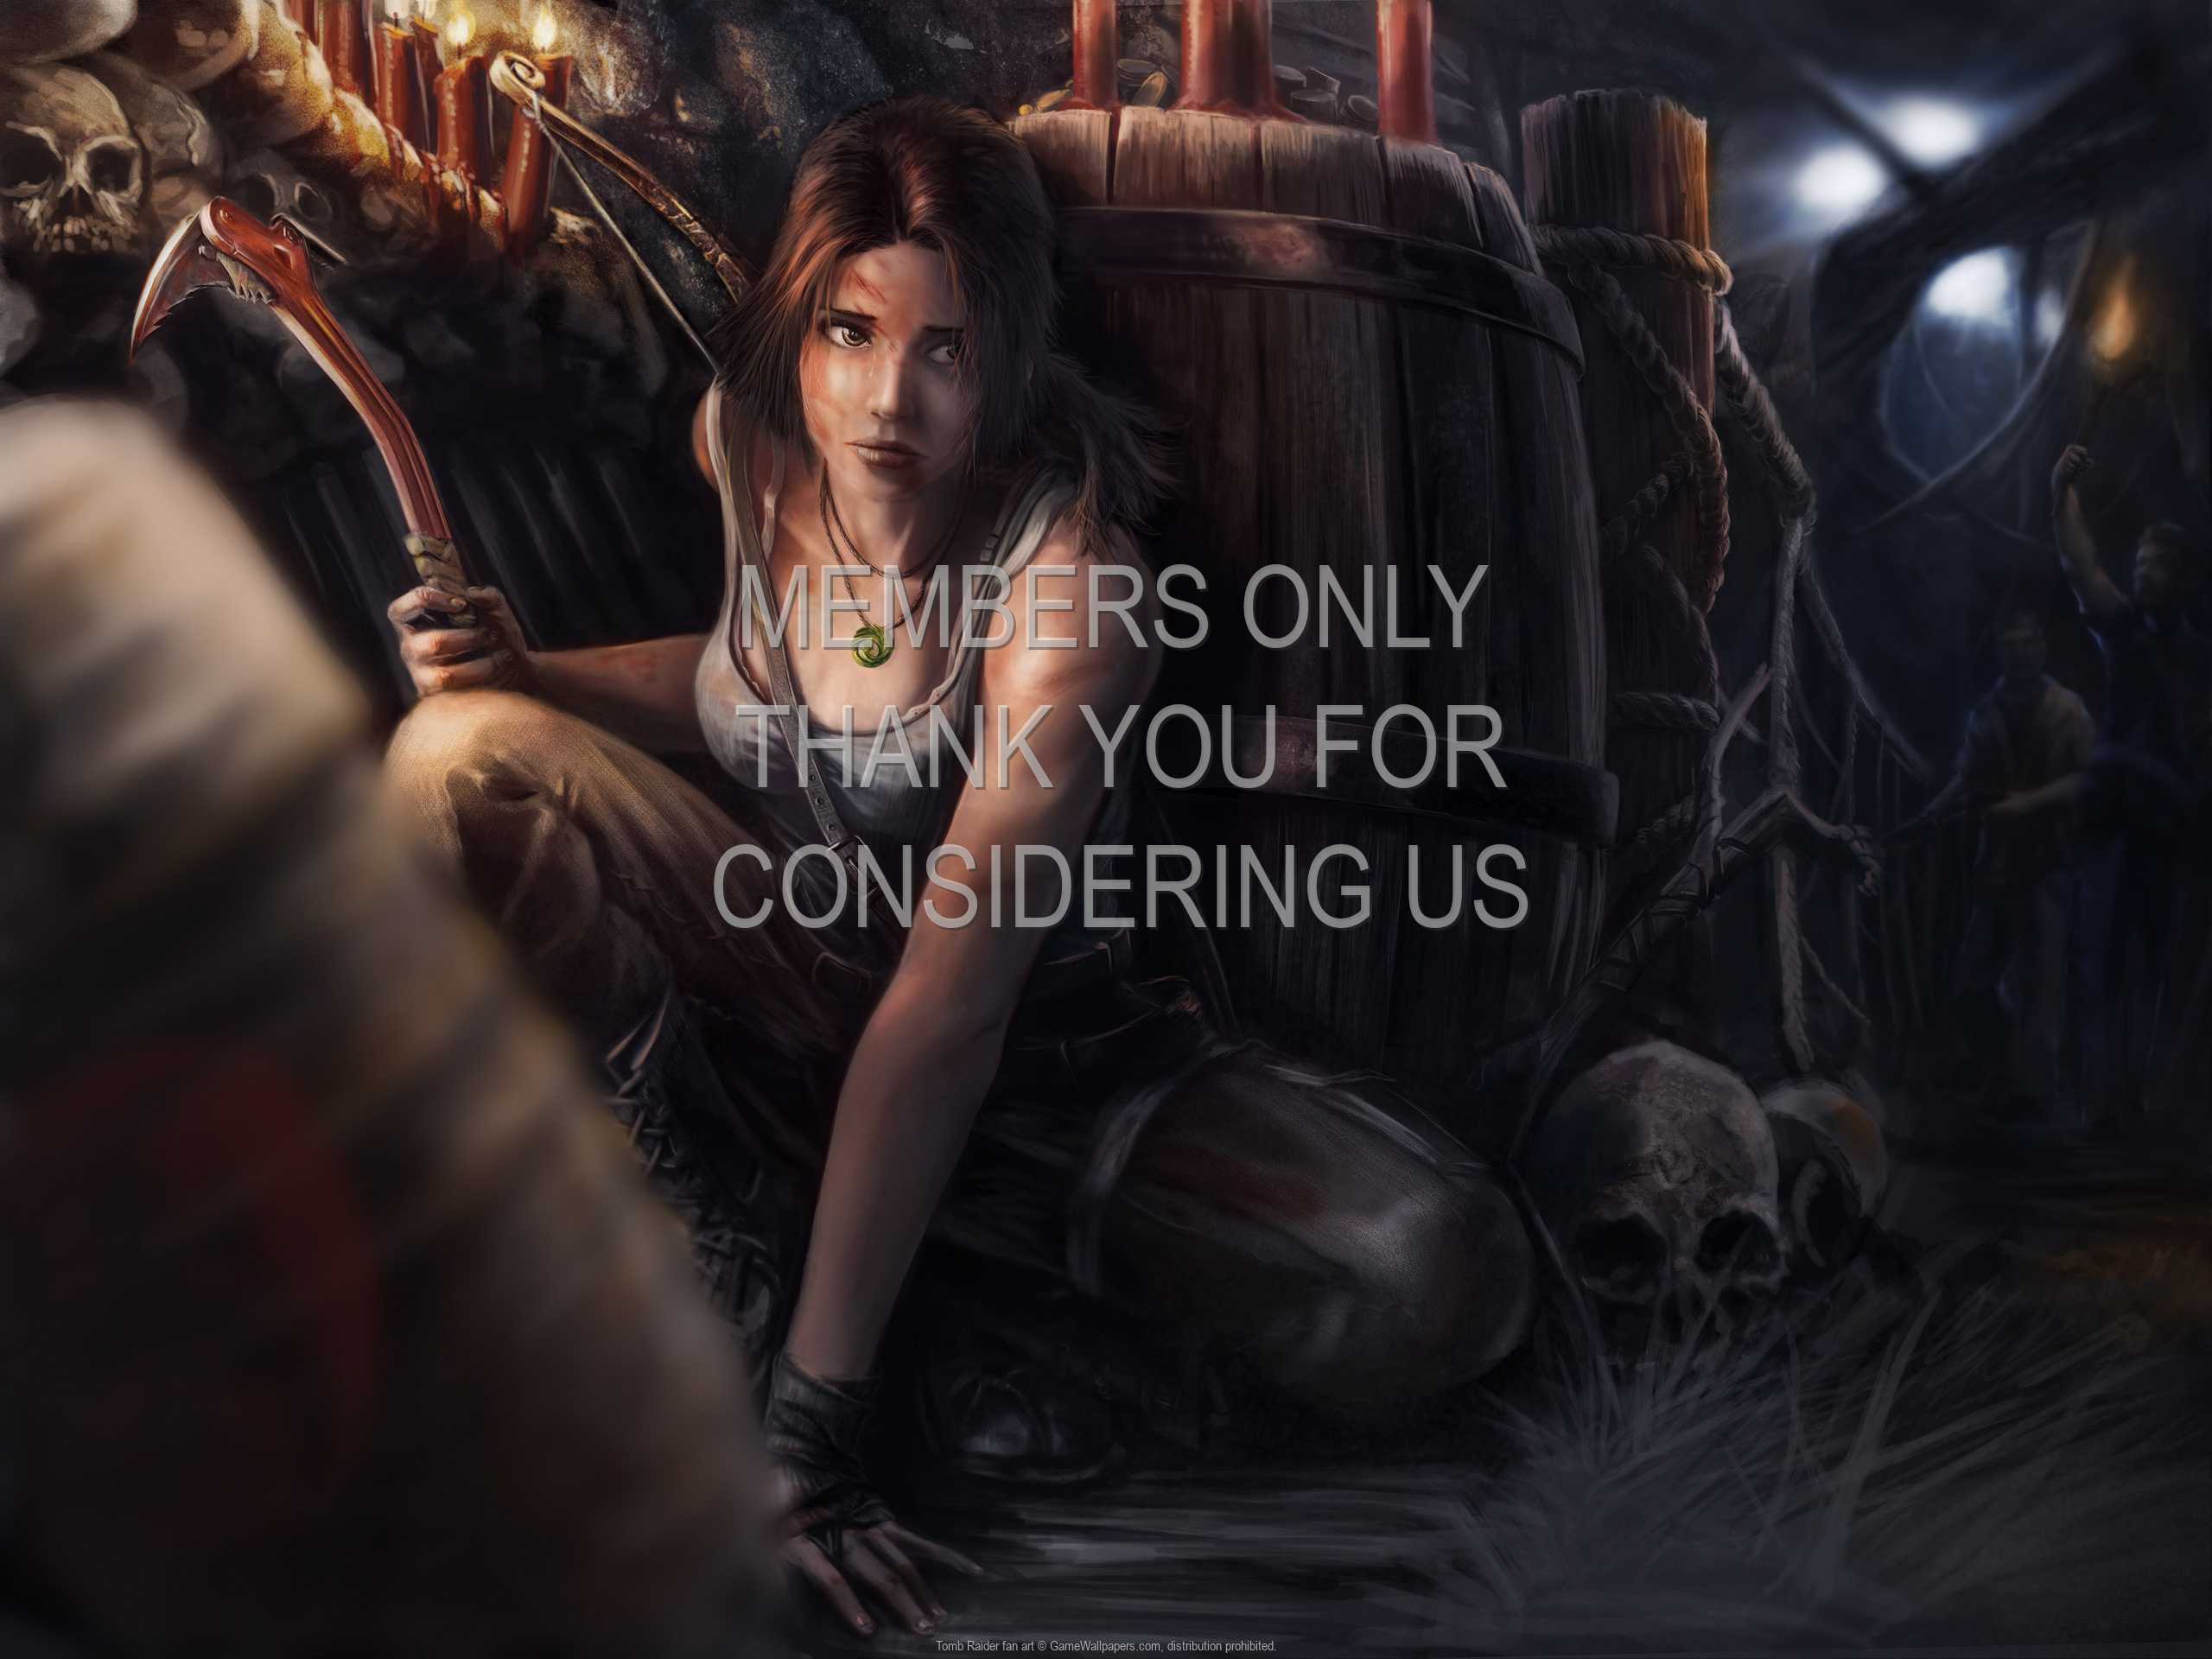 Tomb Raider fan art 1080p%20Horizontal Mobile wallpaper or background 03